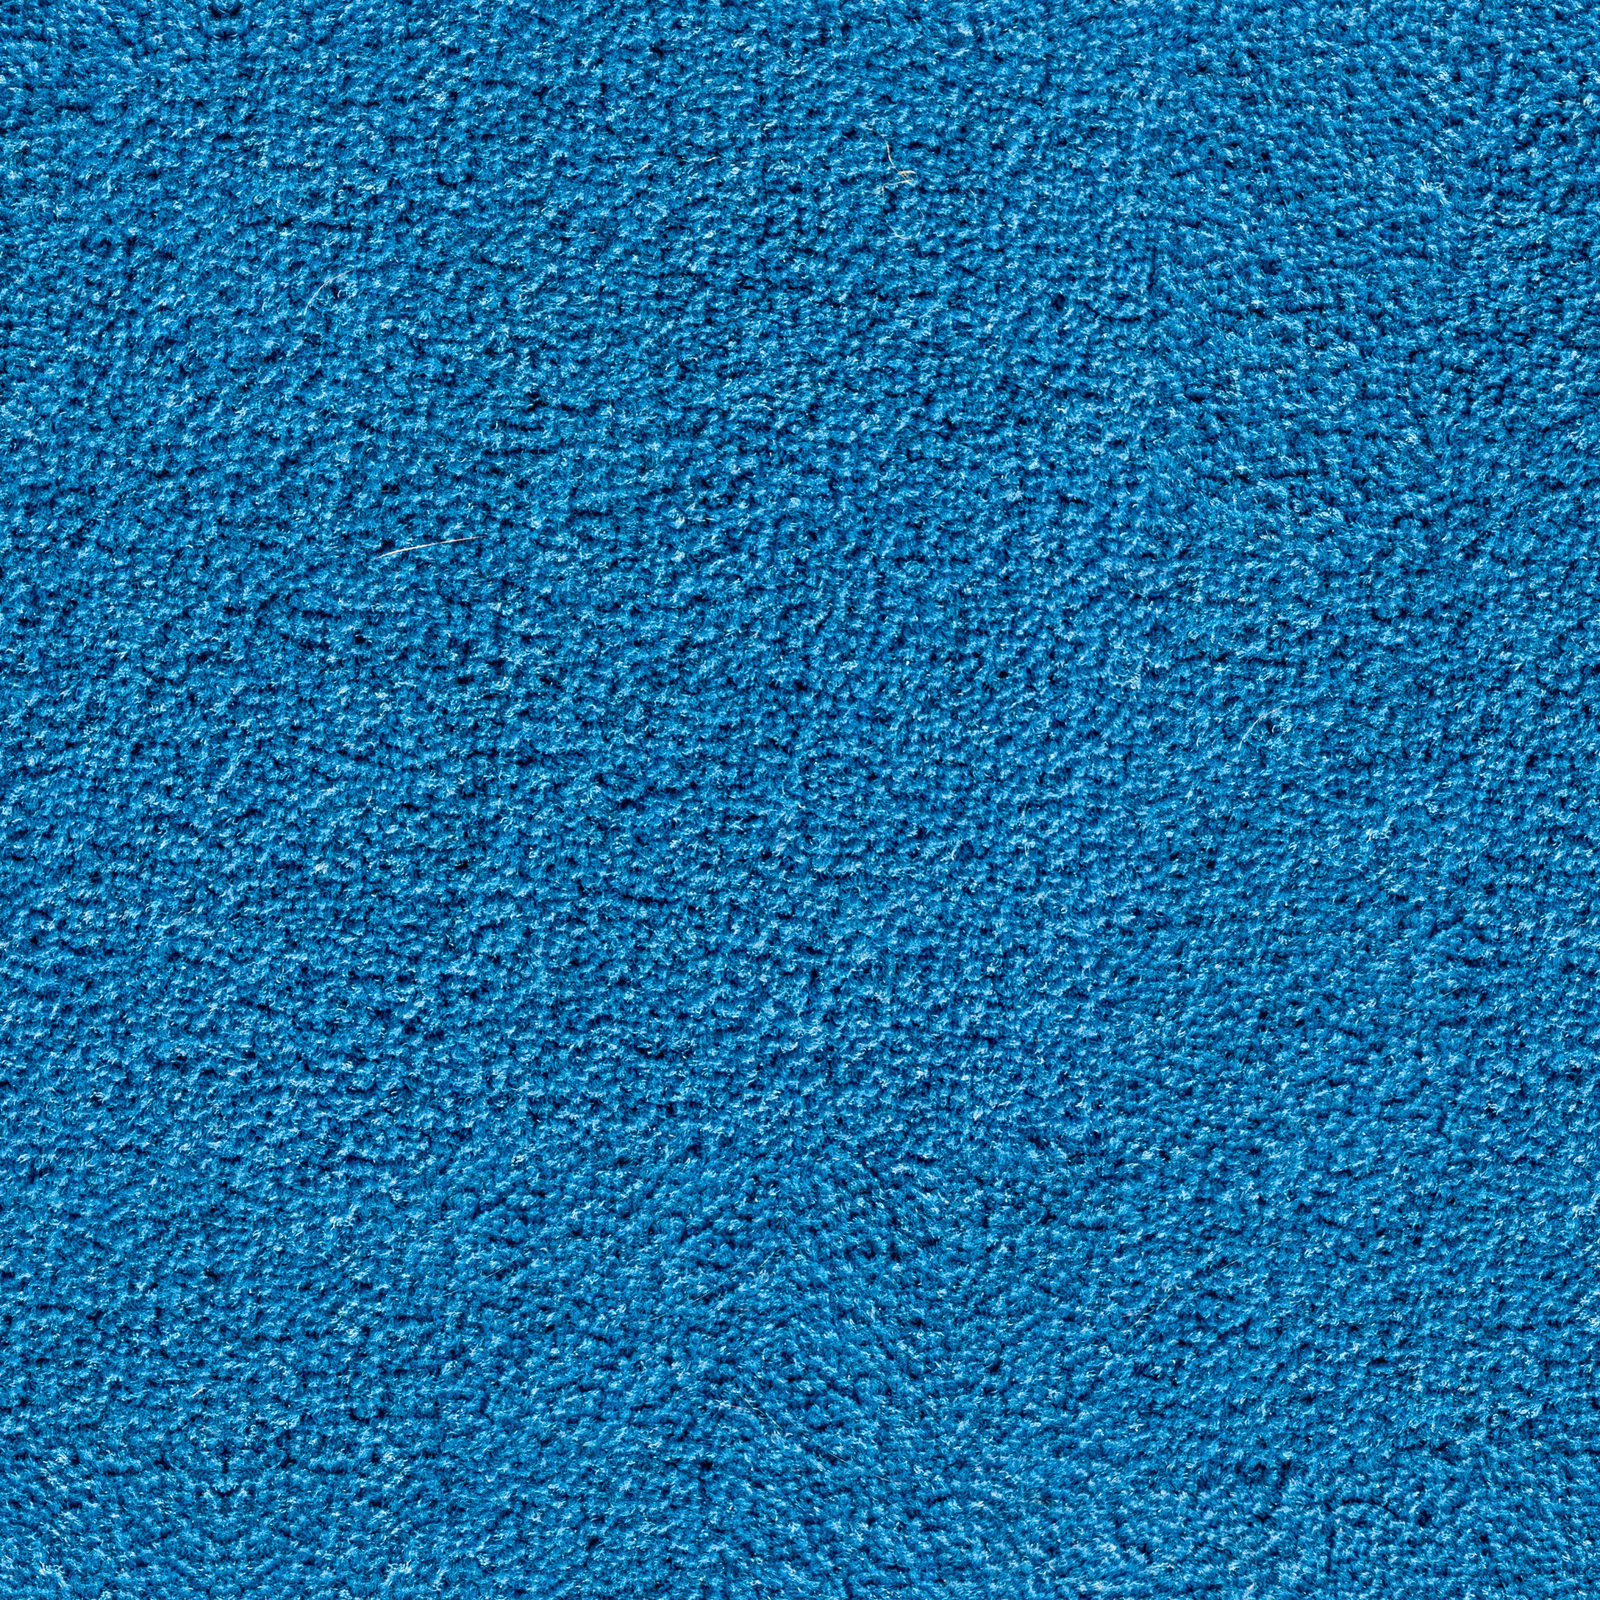 Fabric Blue Carpet Texture